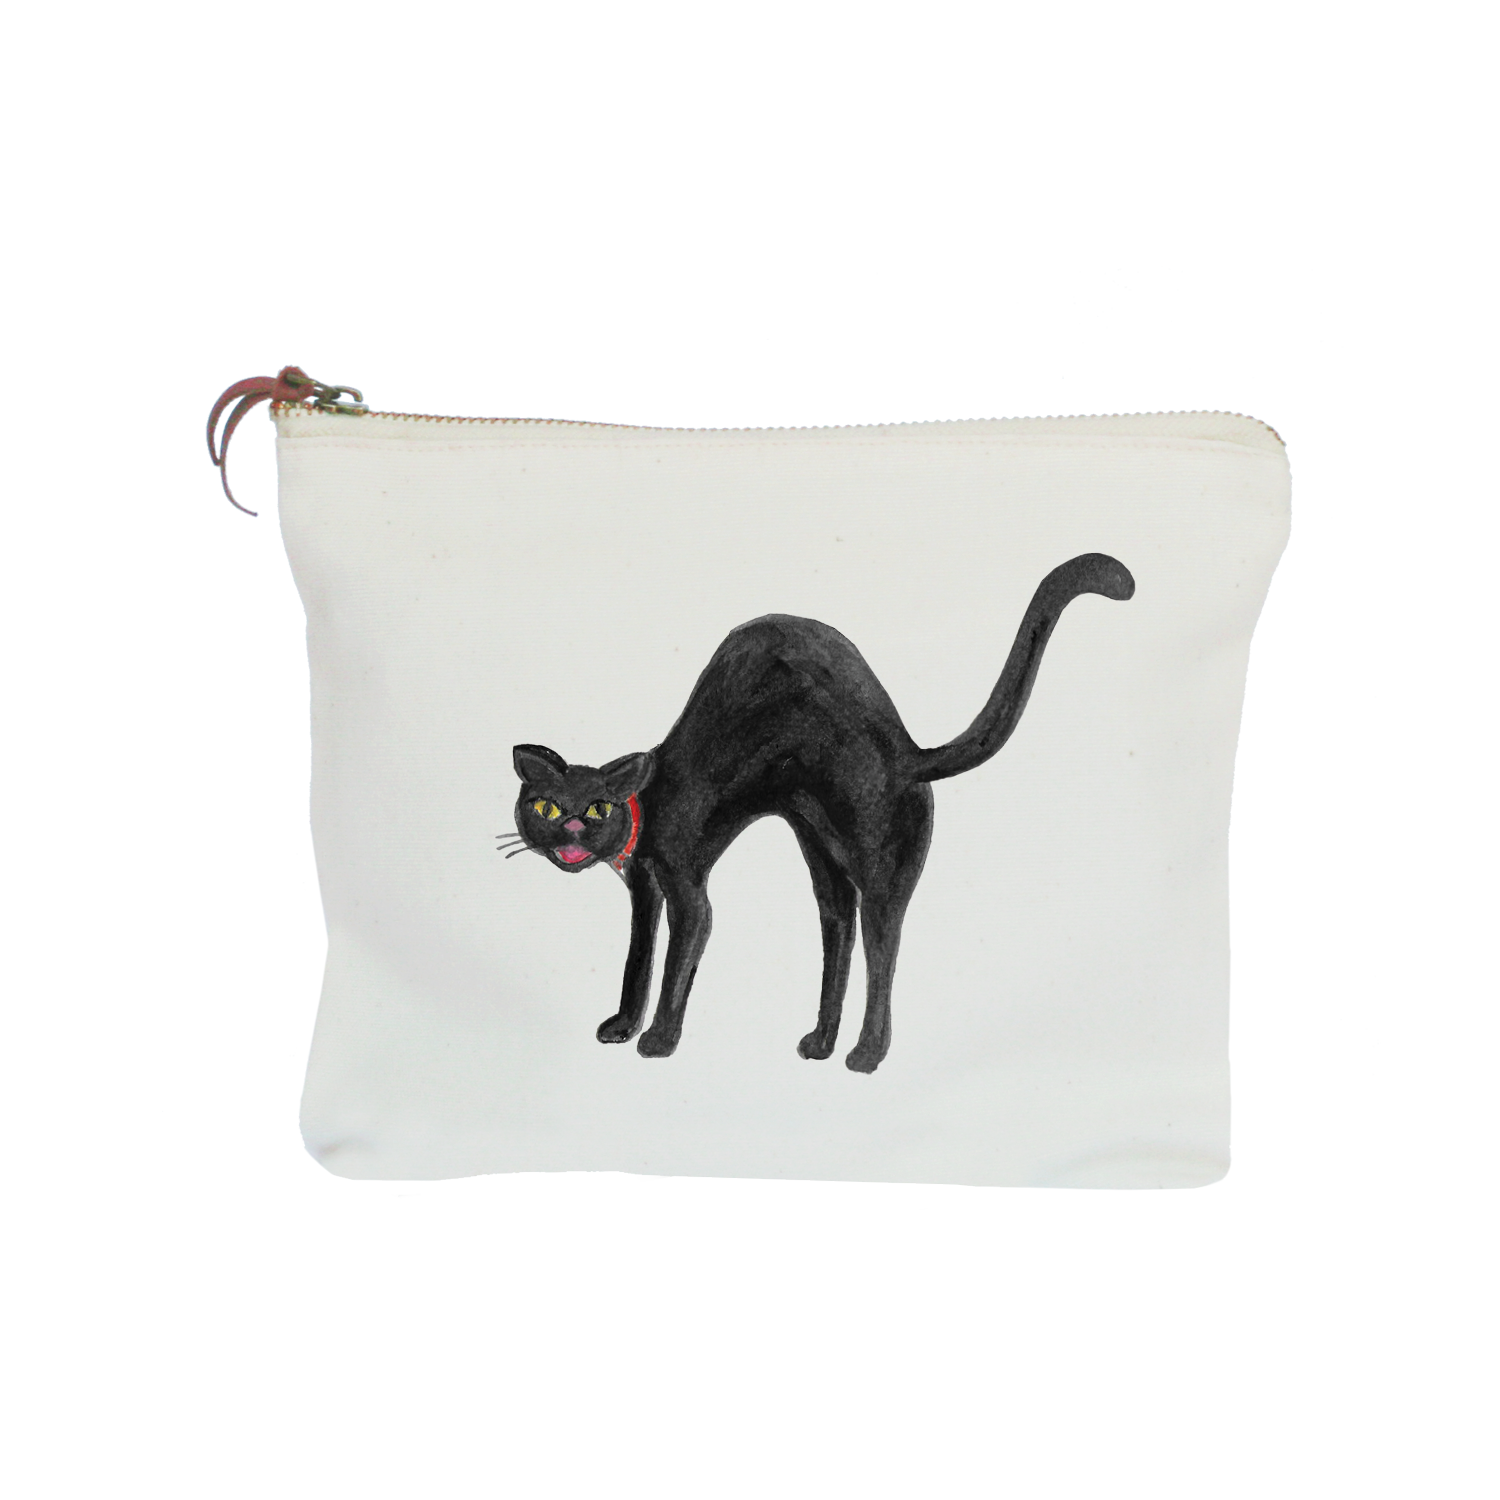 black cat zipper pouch